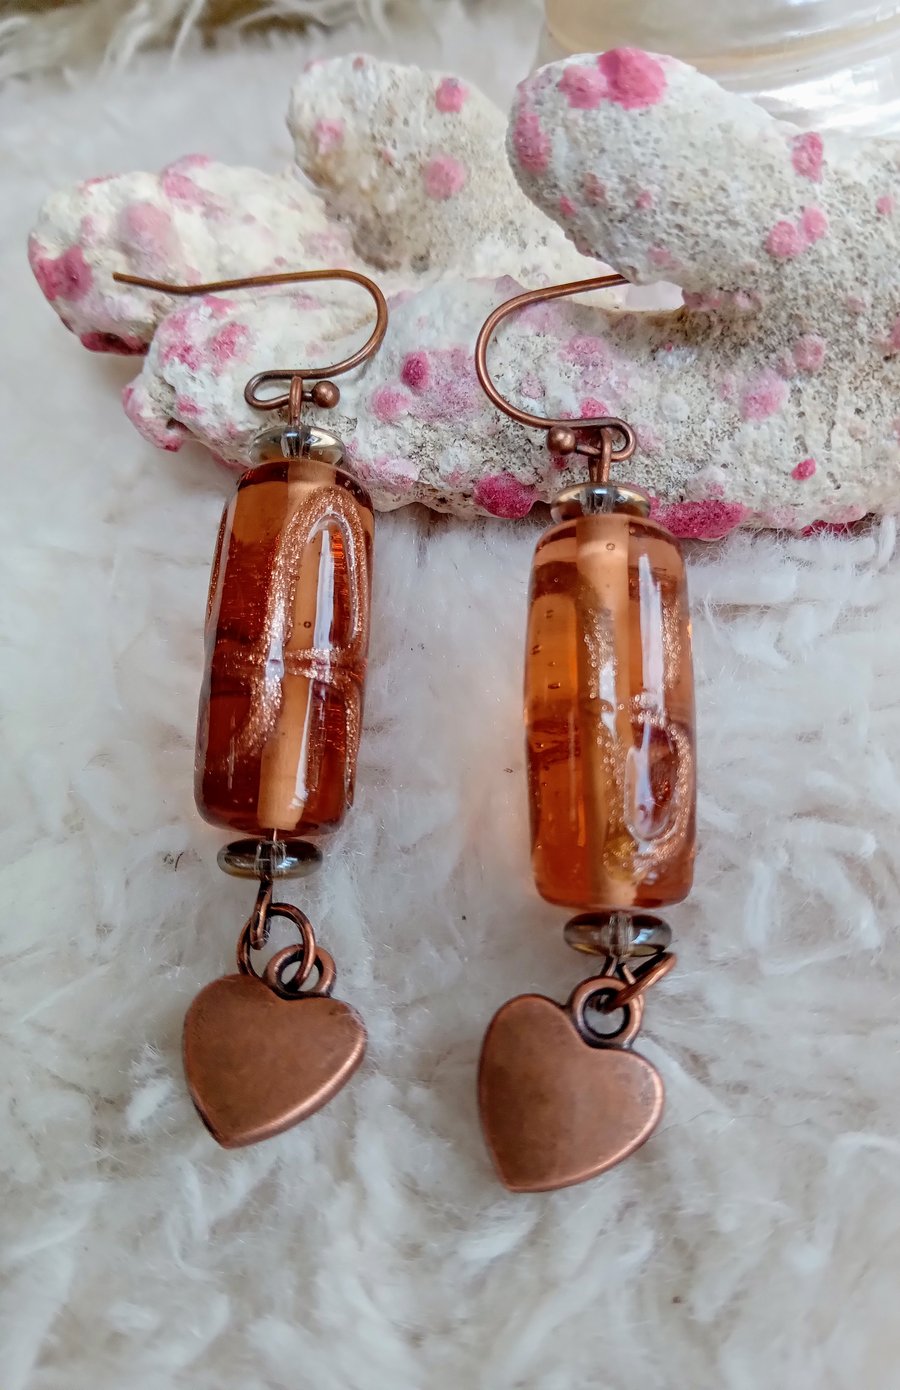 Handmade Lampwork beads with copper HEART charm on copper findings EARRINGS